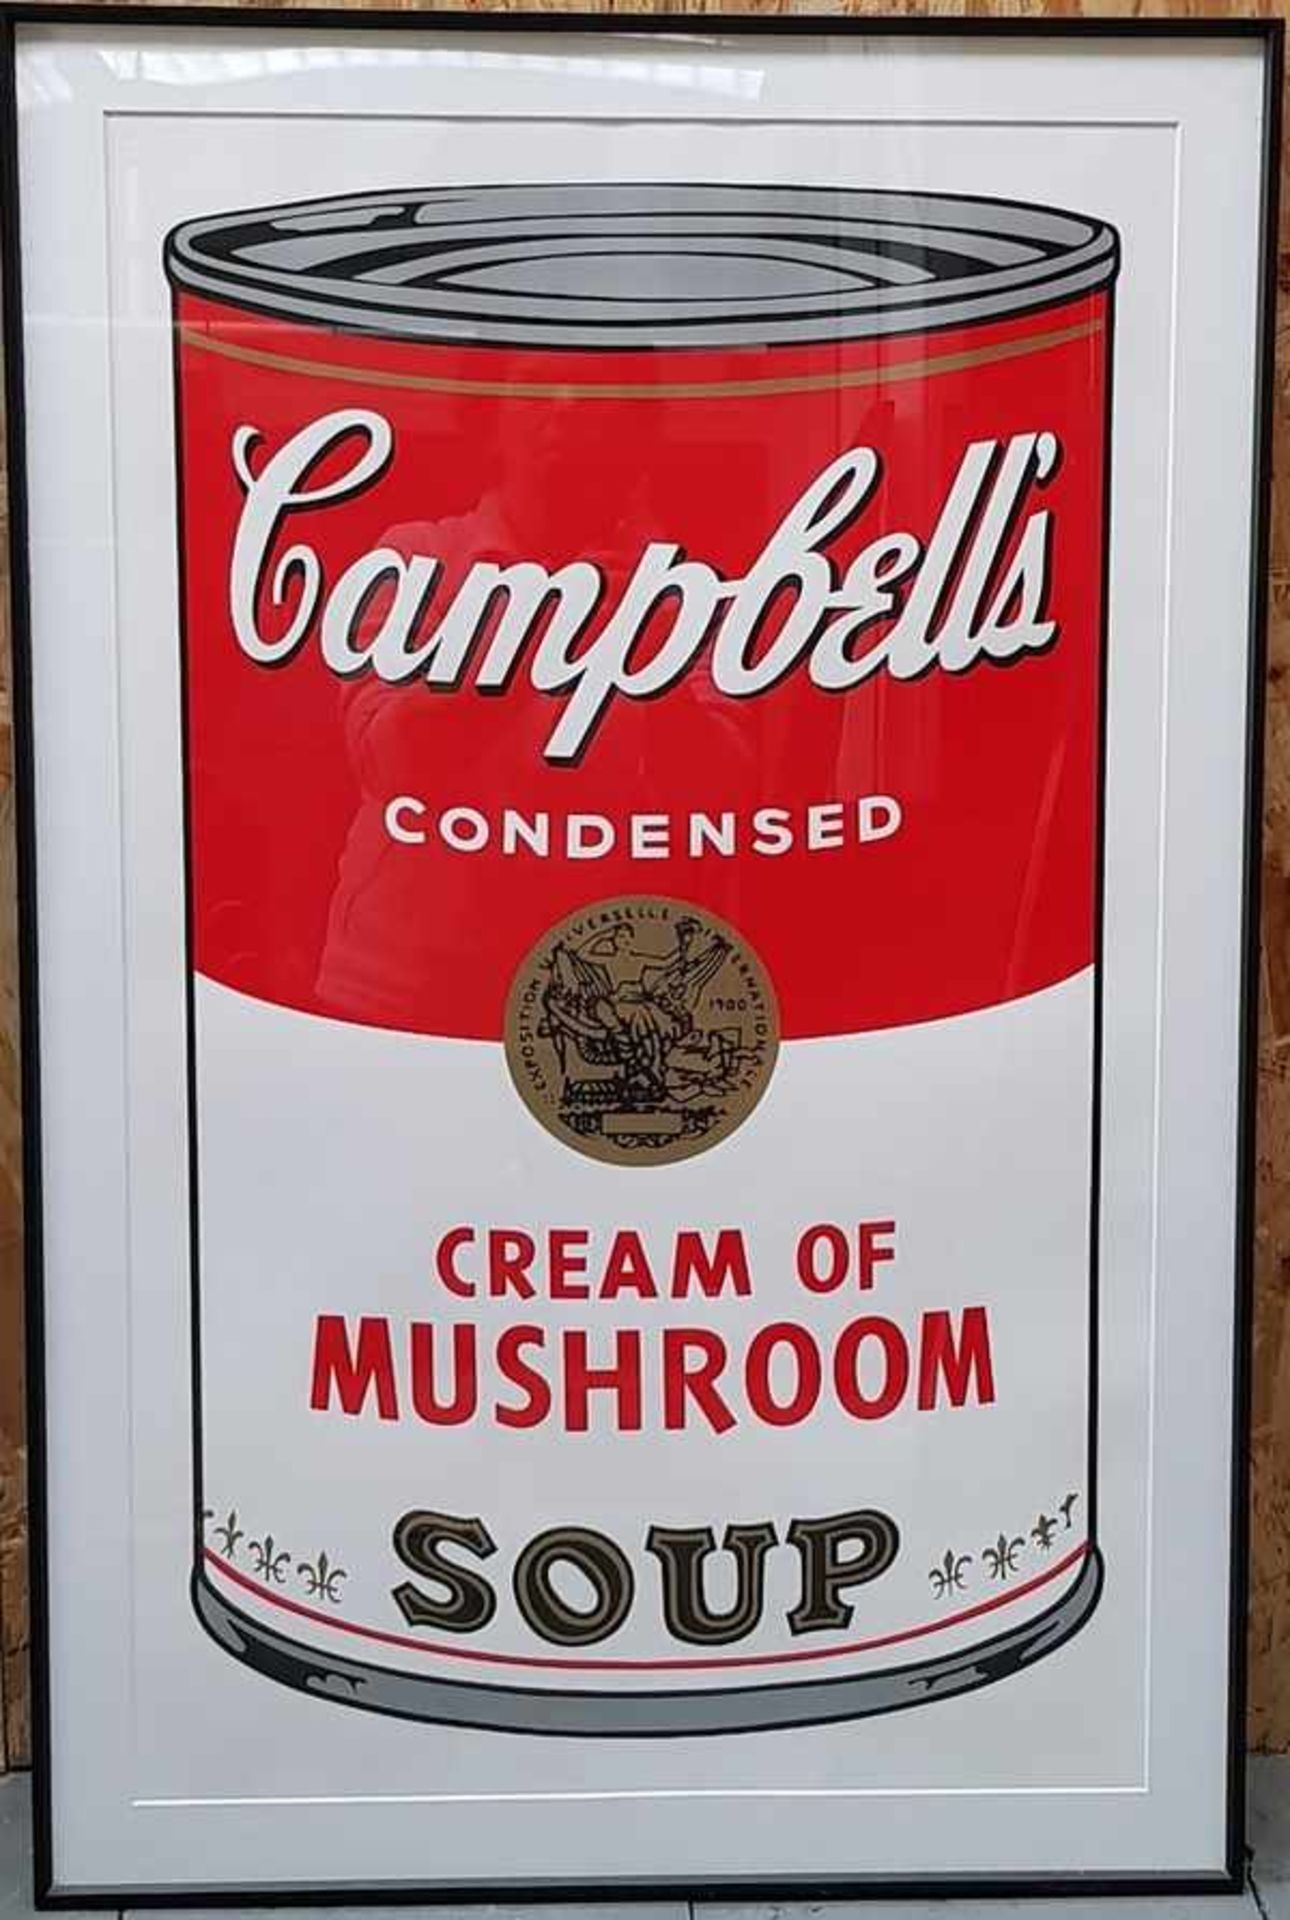 (Kunst) Zeefdruk "Cream of mushroom" Andy WarholZeefdruk "Cream of mushroom" uit serie 1 Campbell' - Image 2 of 2